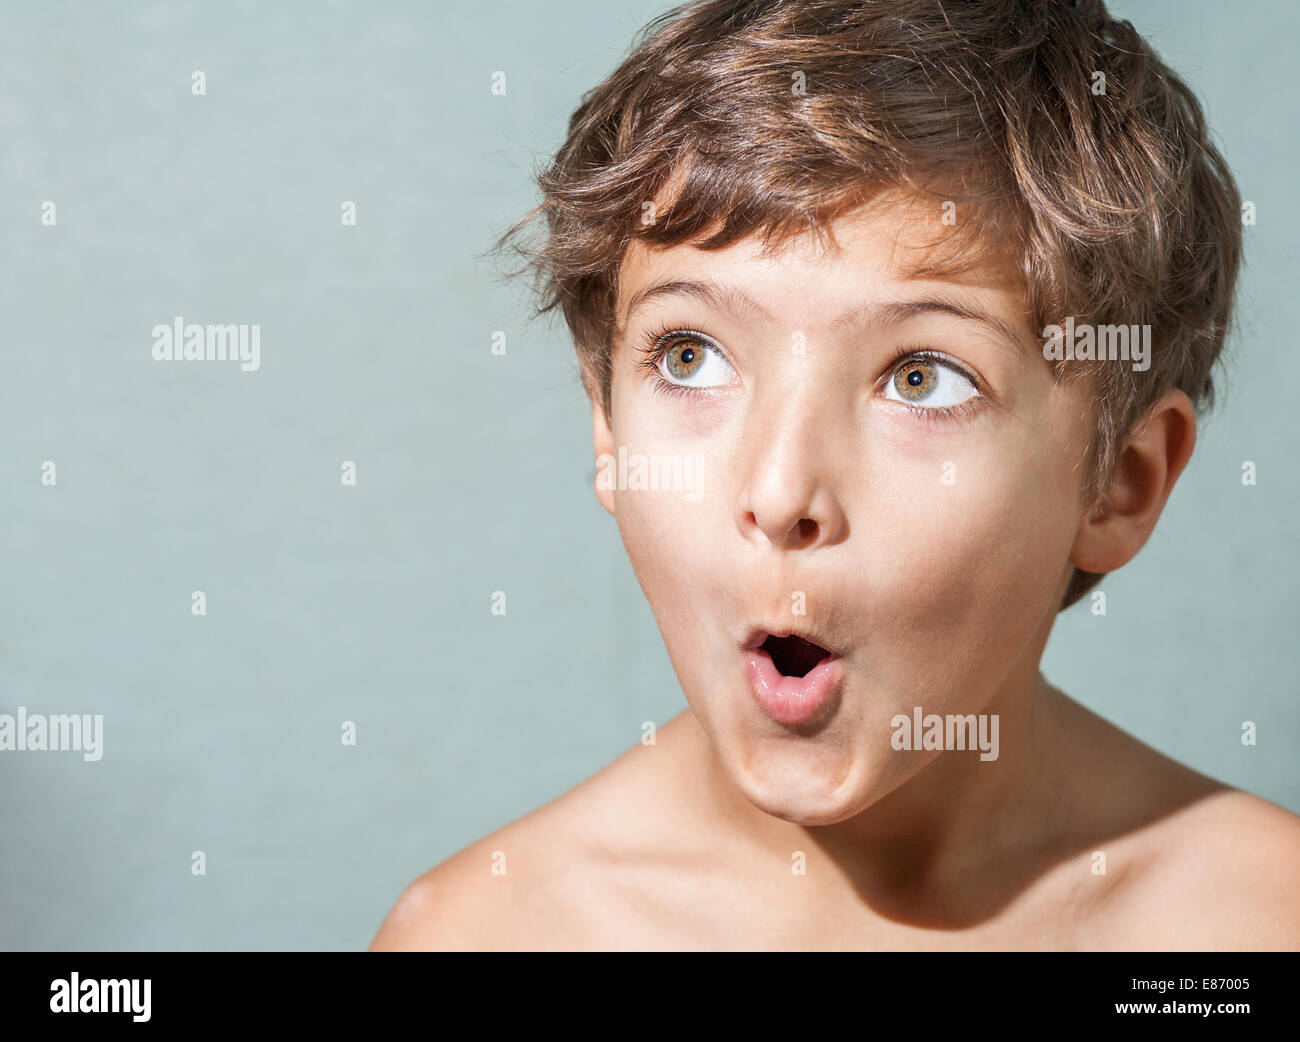 amazed 7 years old boy make funny faces Stock Photo